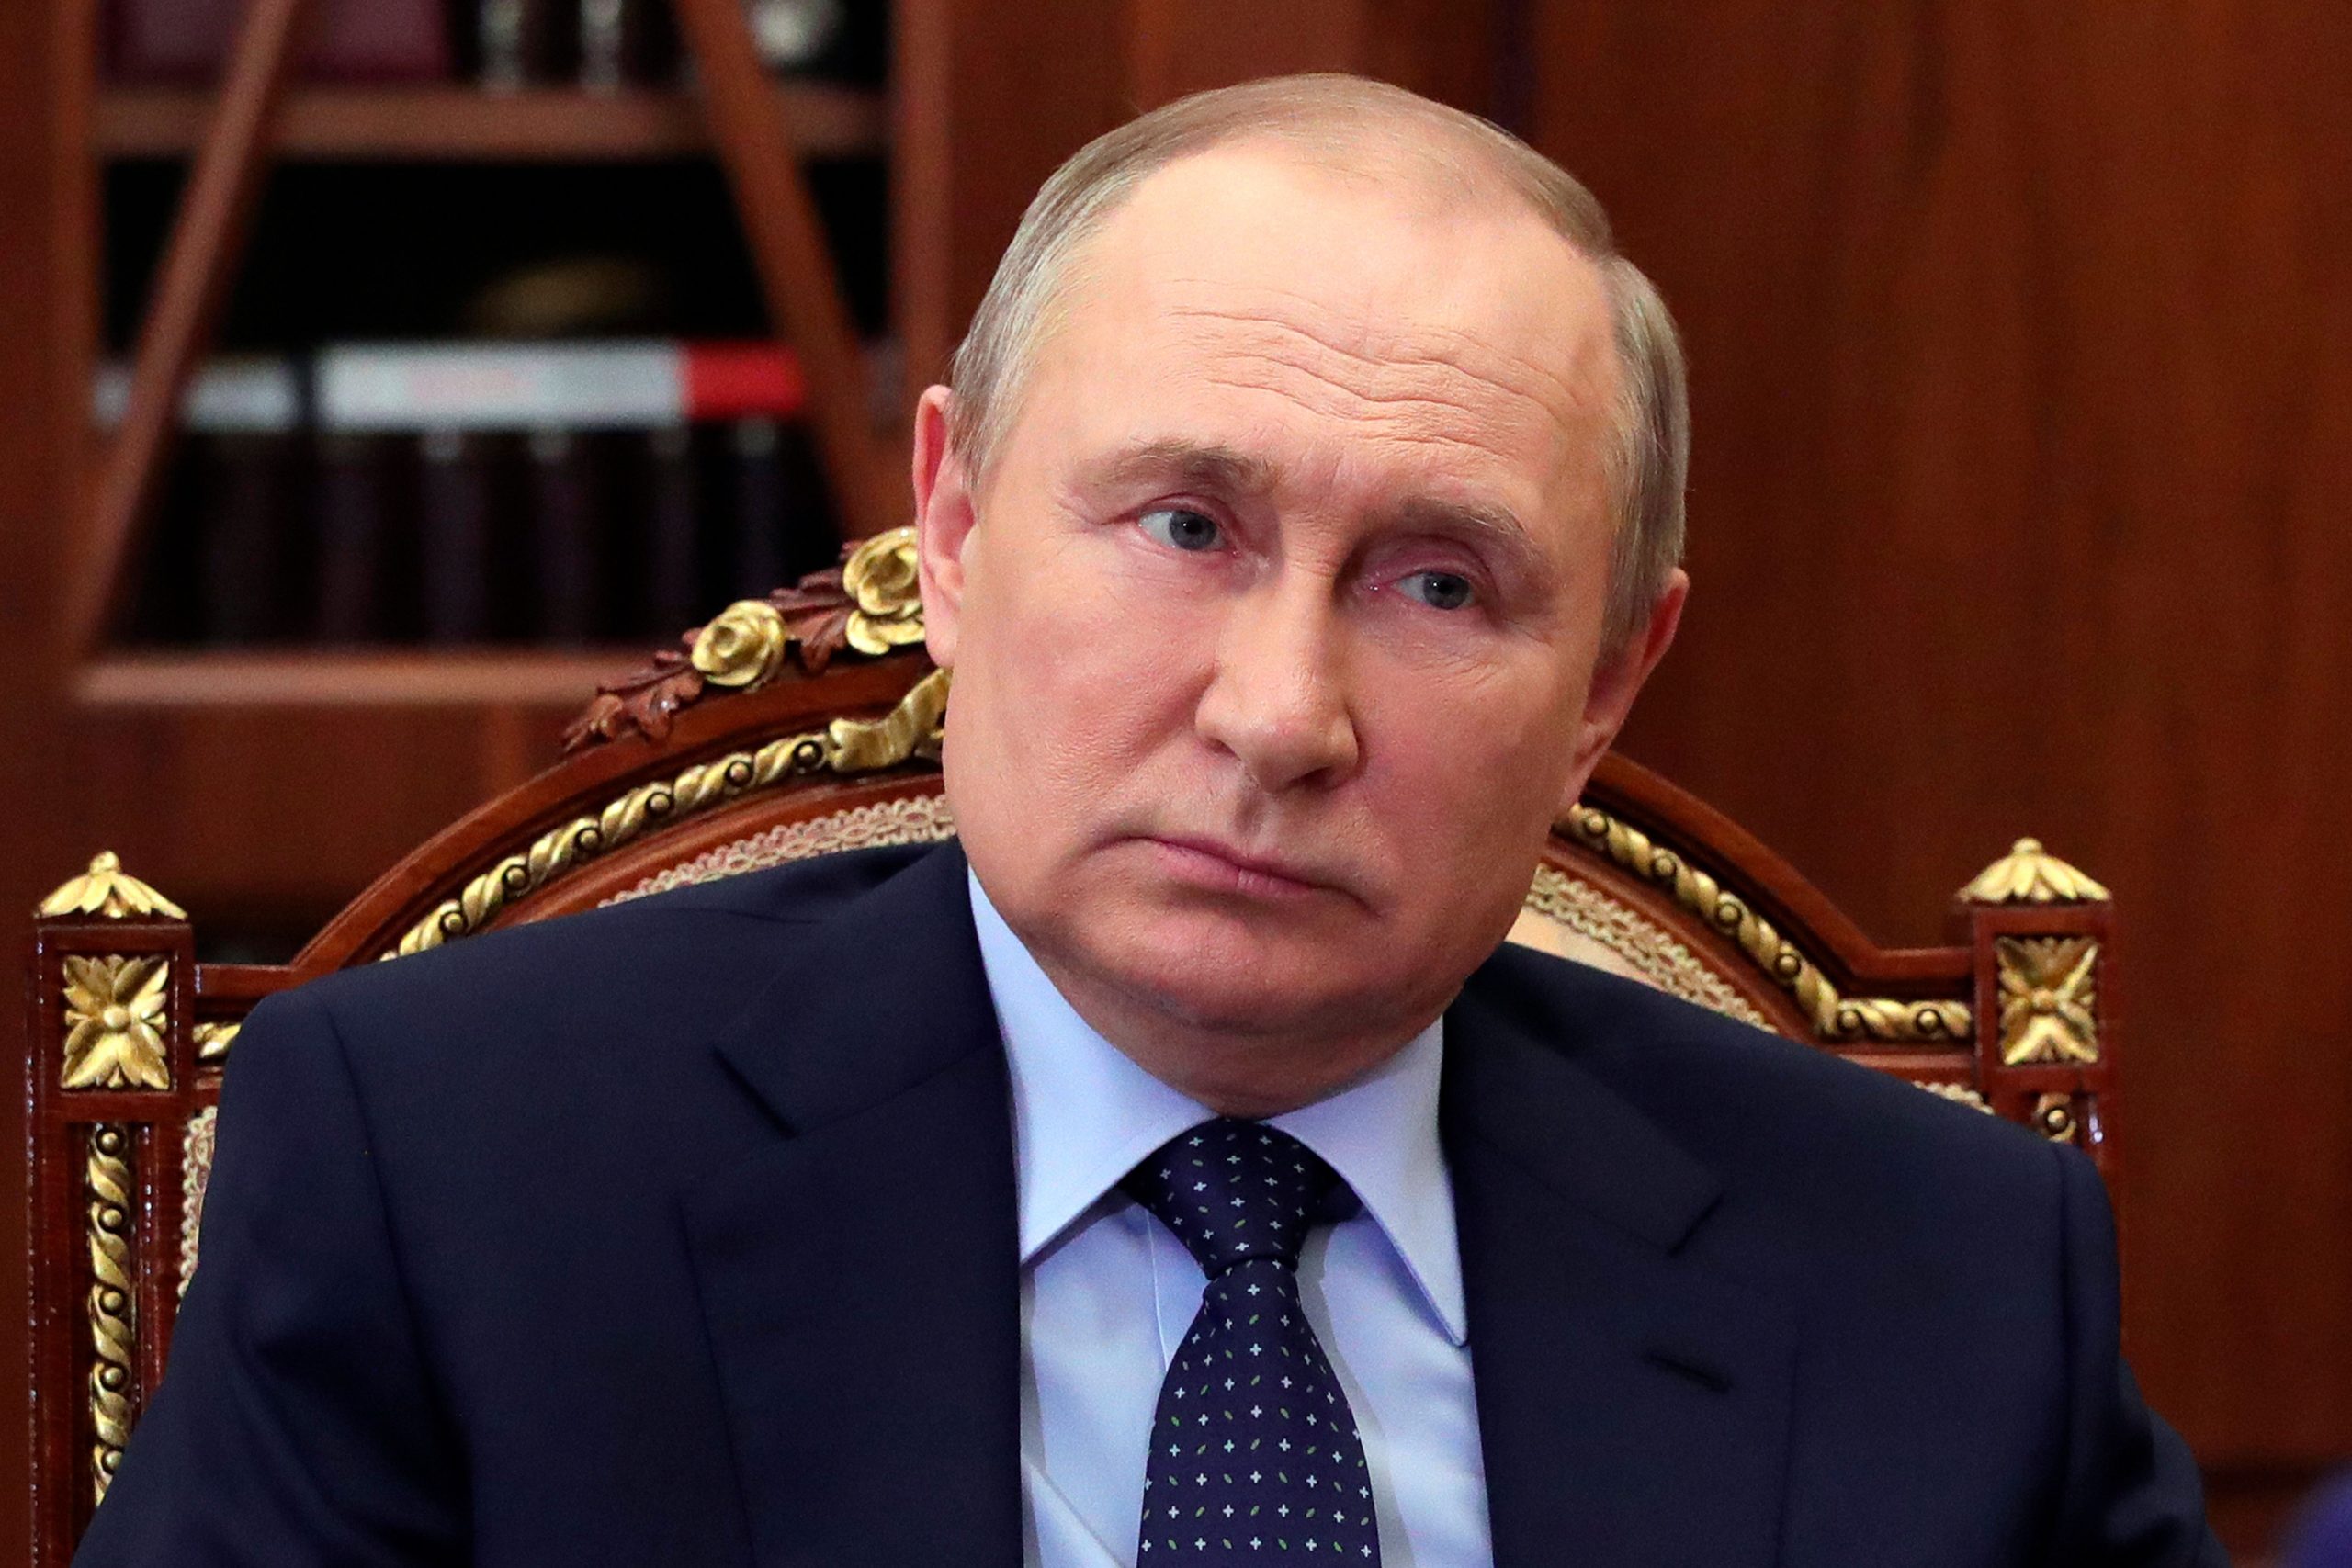 ‘Western leaders would look ‘disgusting’ if they were topless’: Russia’s Vladimir Putin